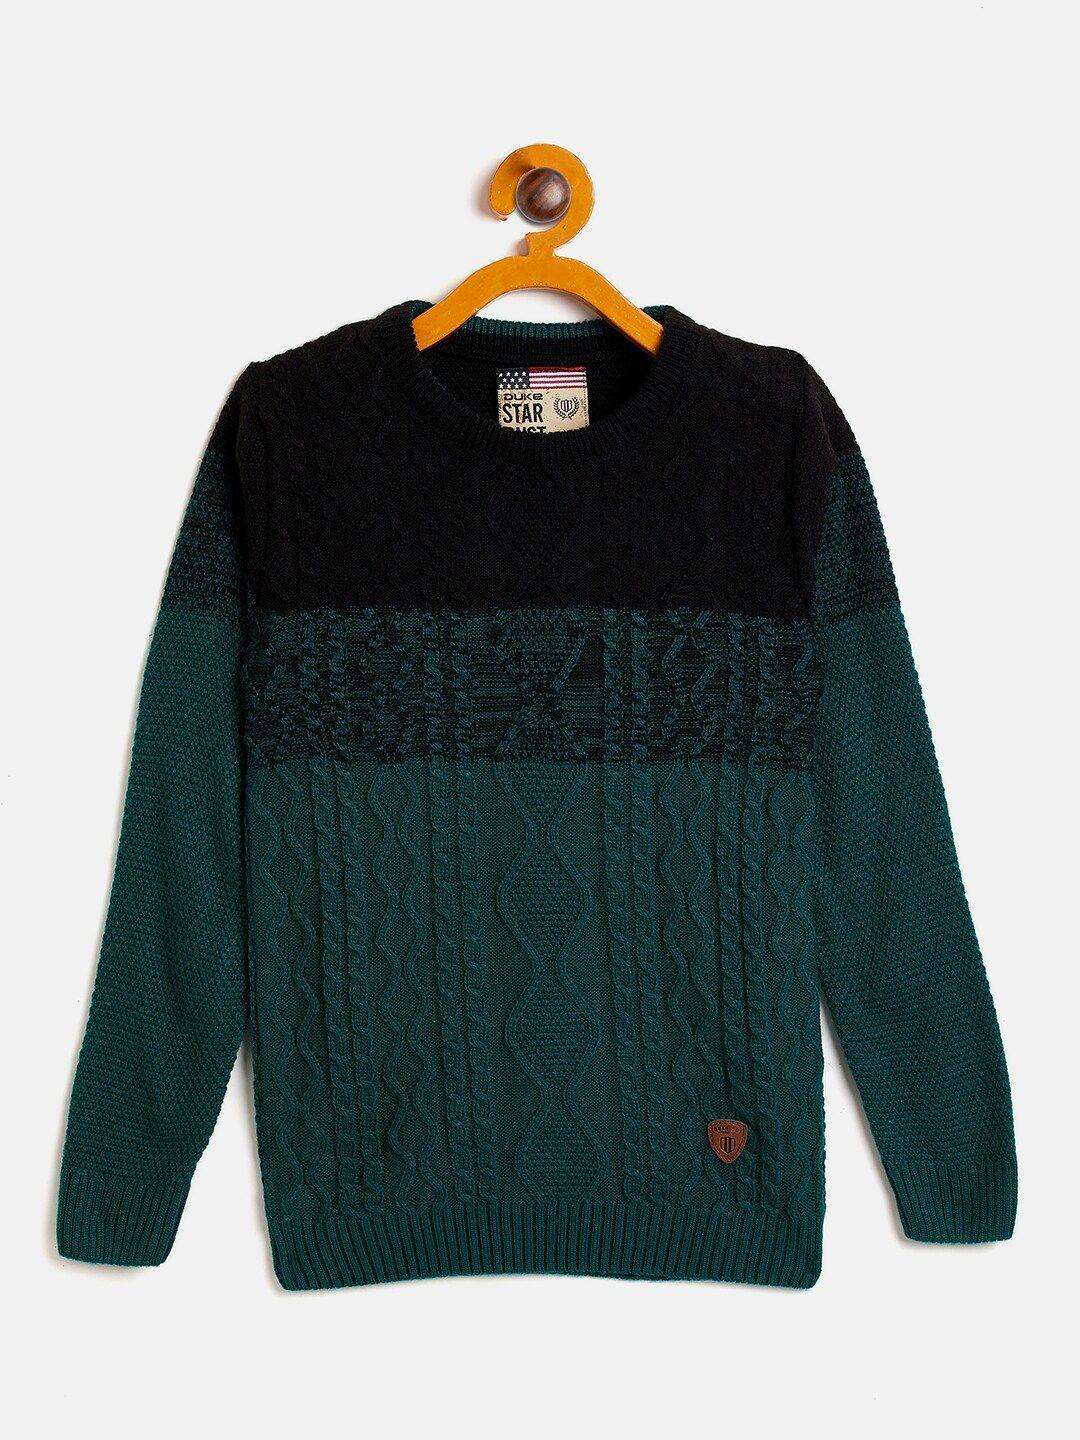 duke boys black & green cable knit pullover